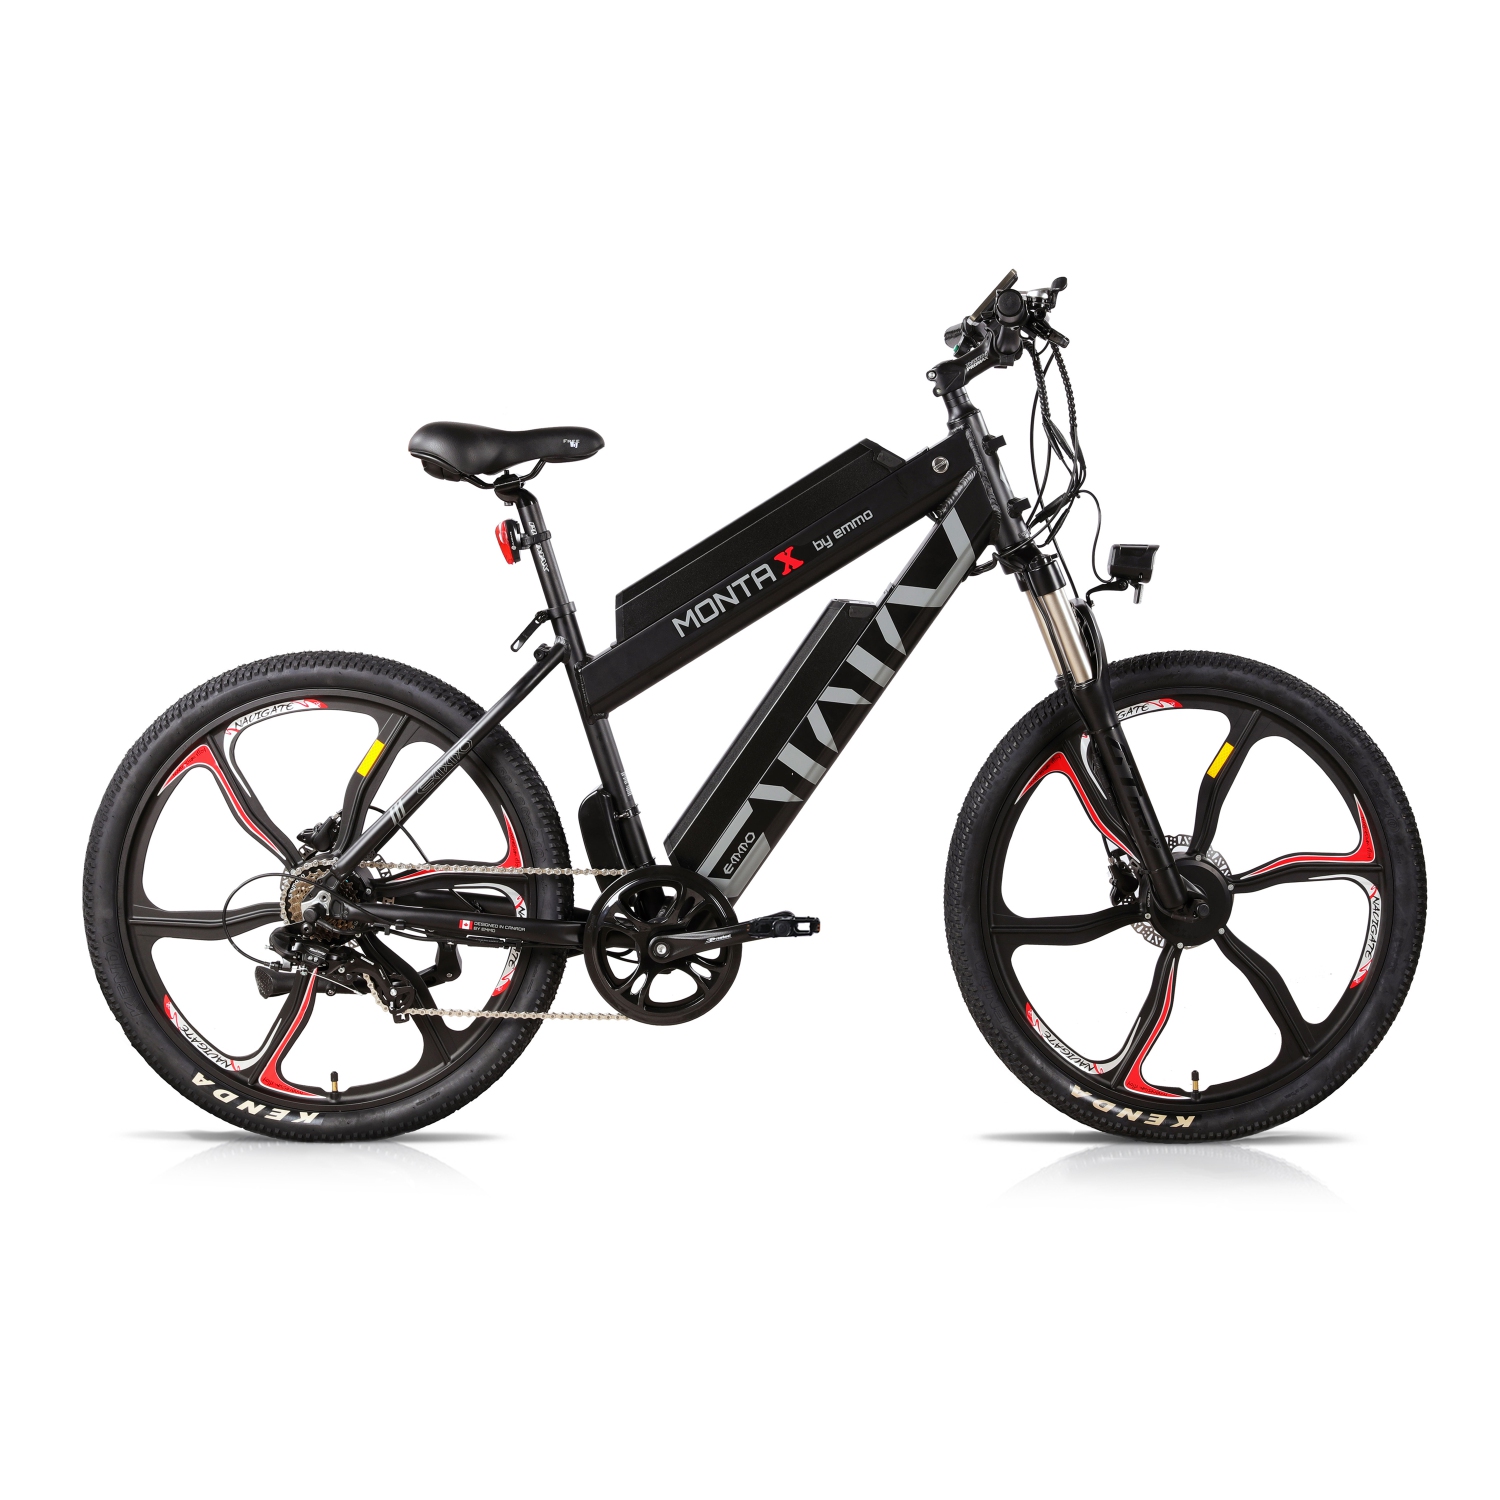 Emmo Dual Motor Single Battery - High-Performance Electric Mountain Bike - 48V/15Ah Removable Li Battery - Monta X Black